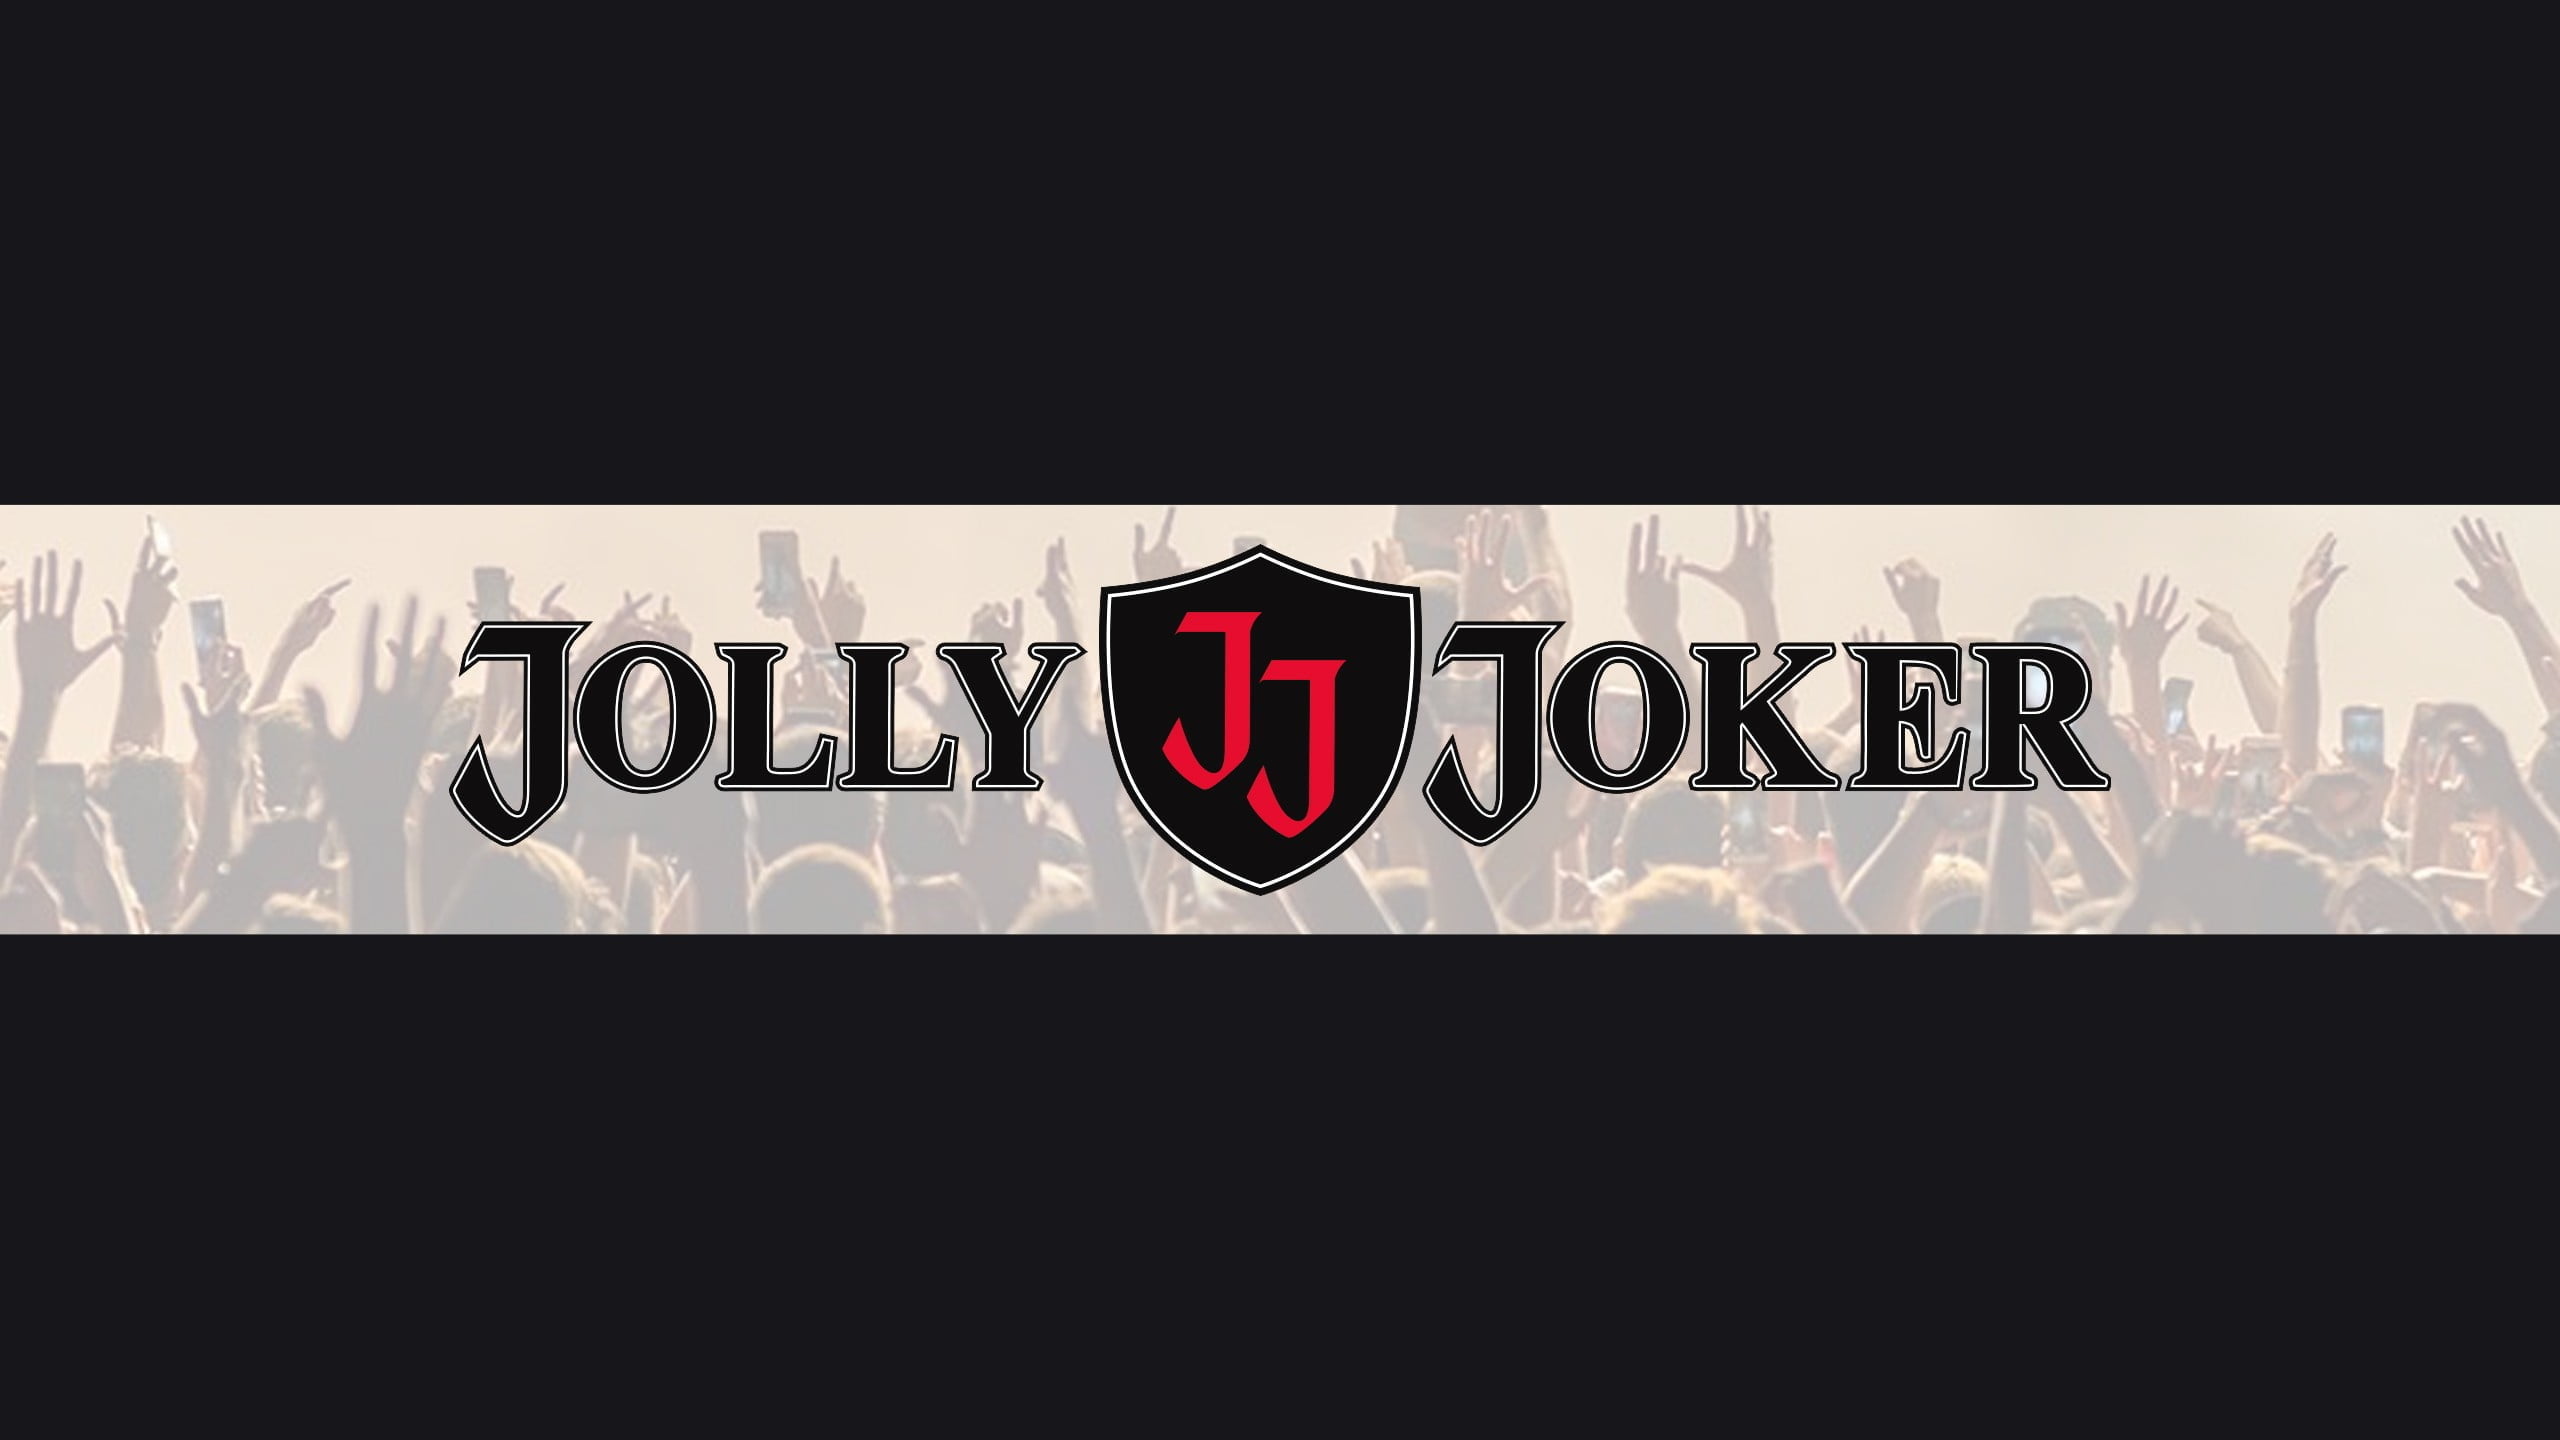 Jolly Joker Adana